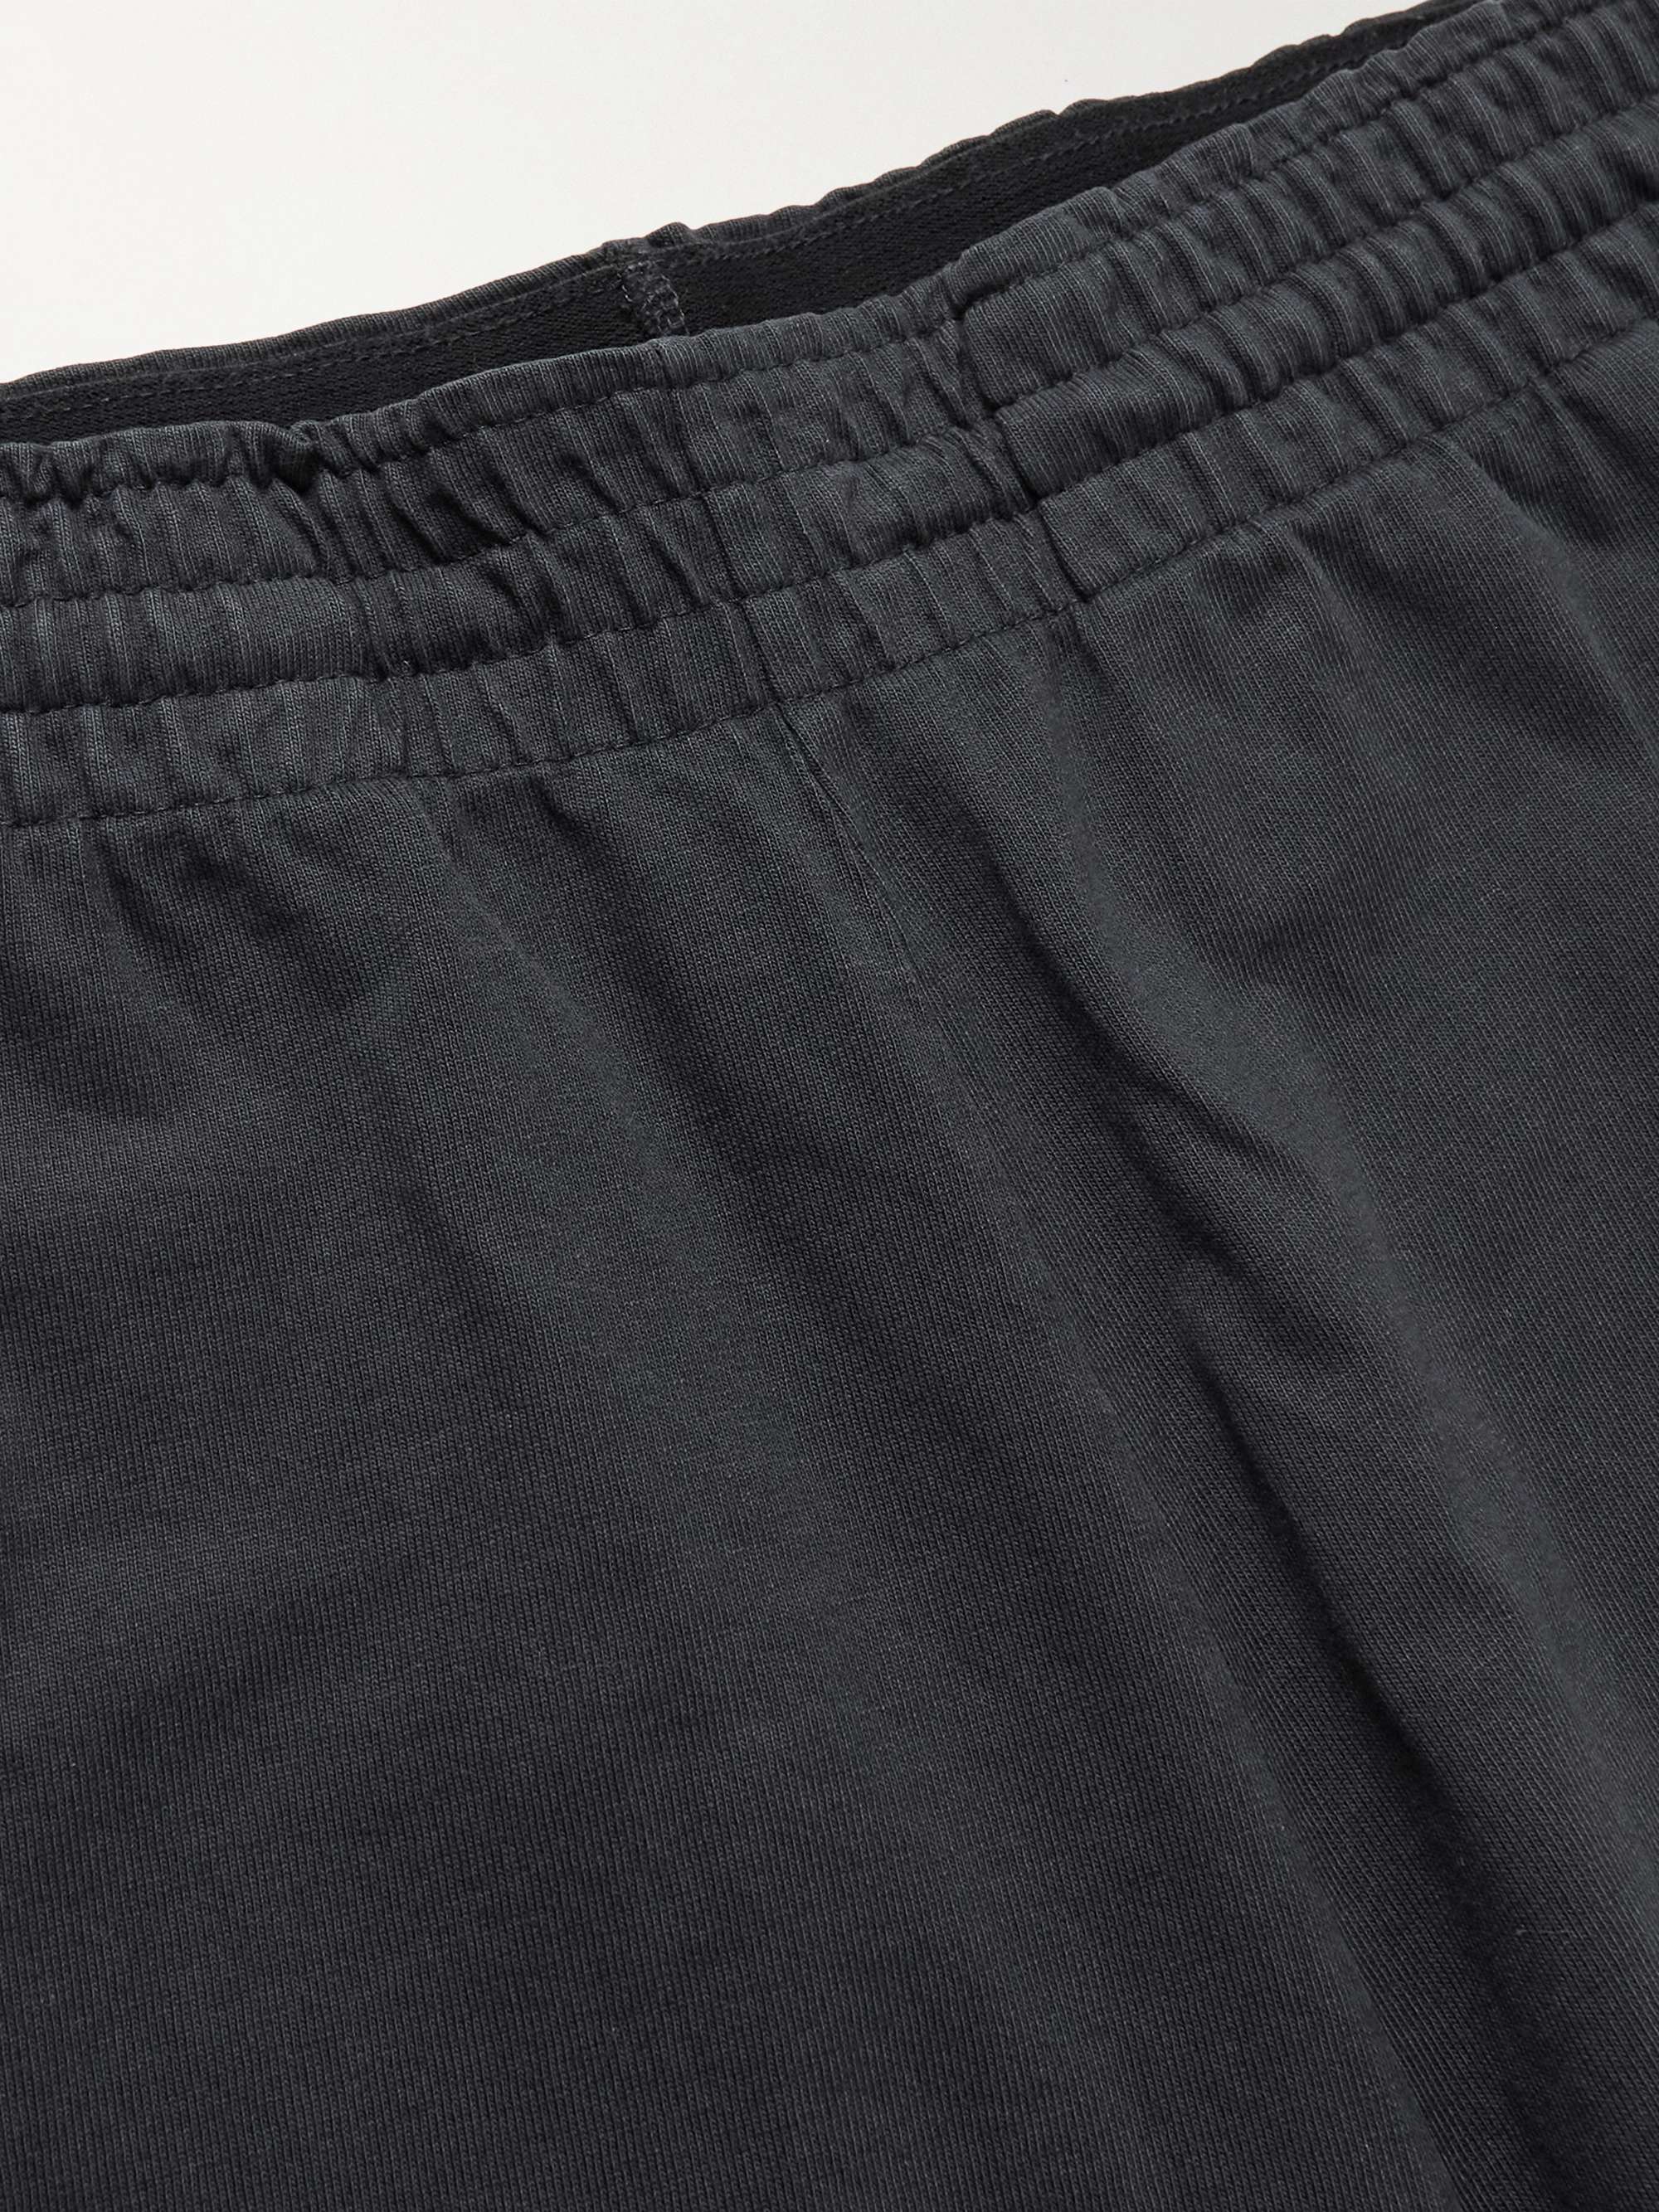 ACNE STUDIOS Straight-Leg Organic Cotton-Jersey Shorts